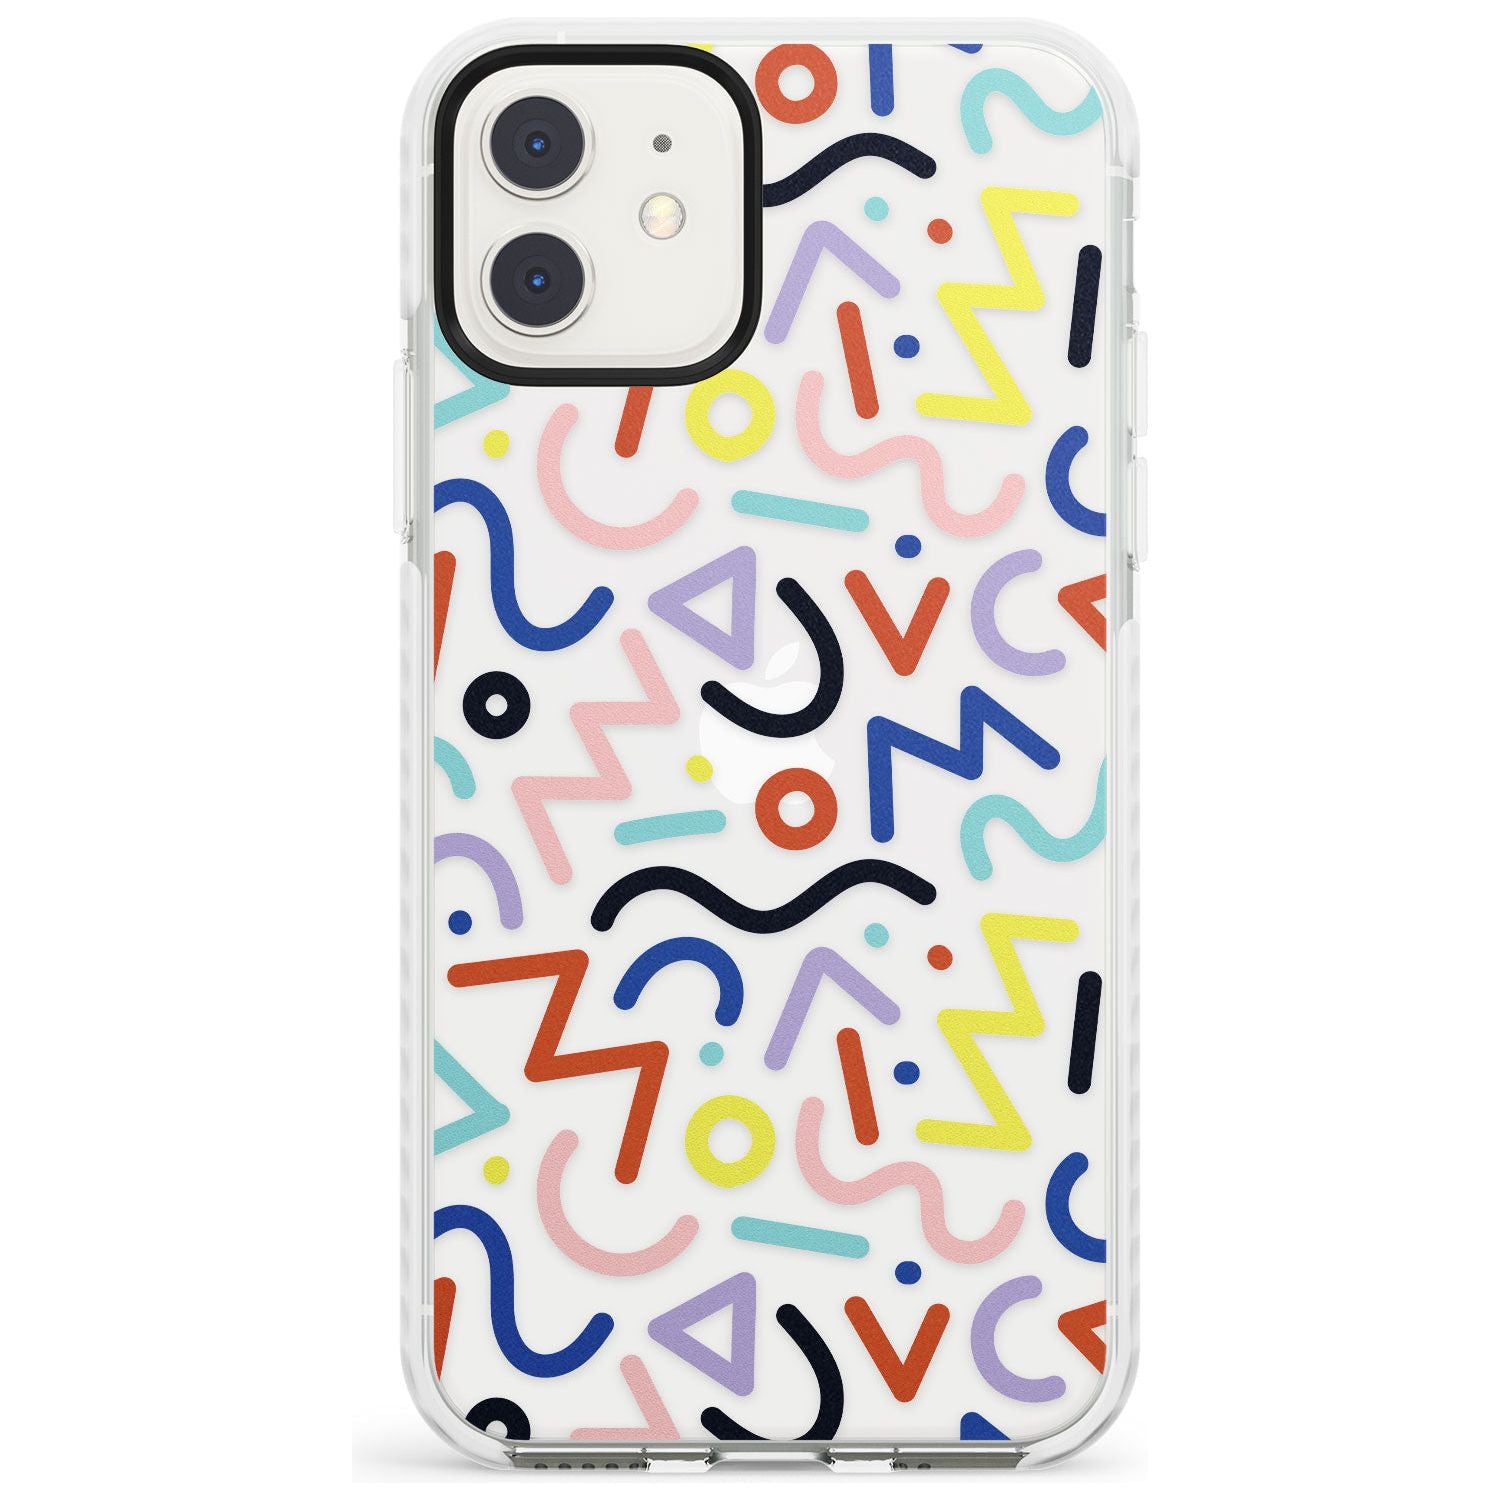 Colourful Squiggles Memphis Retro Pattern Design Impact Phone Case for iPhone 11